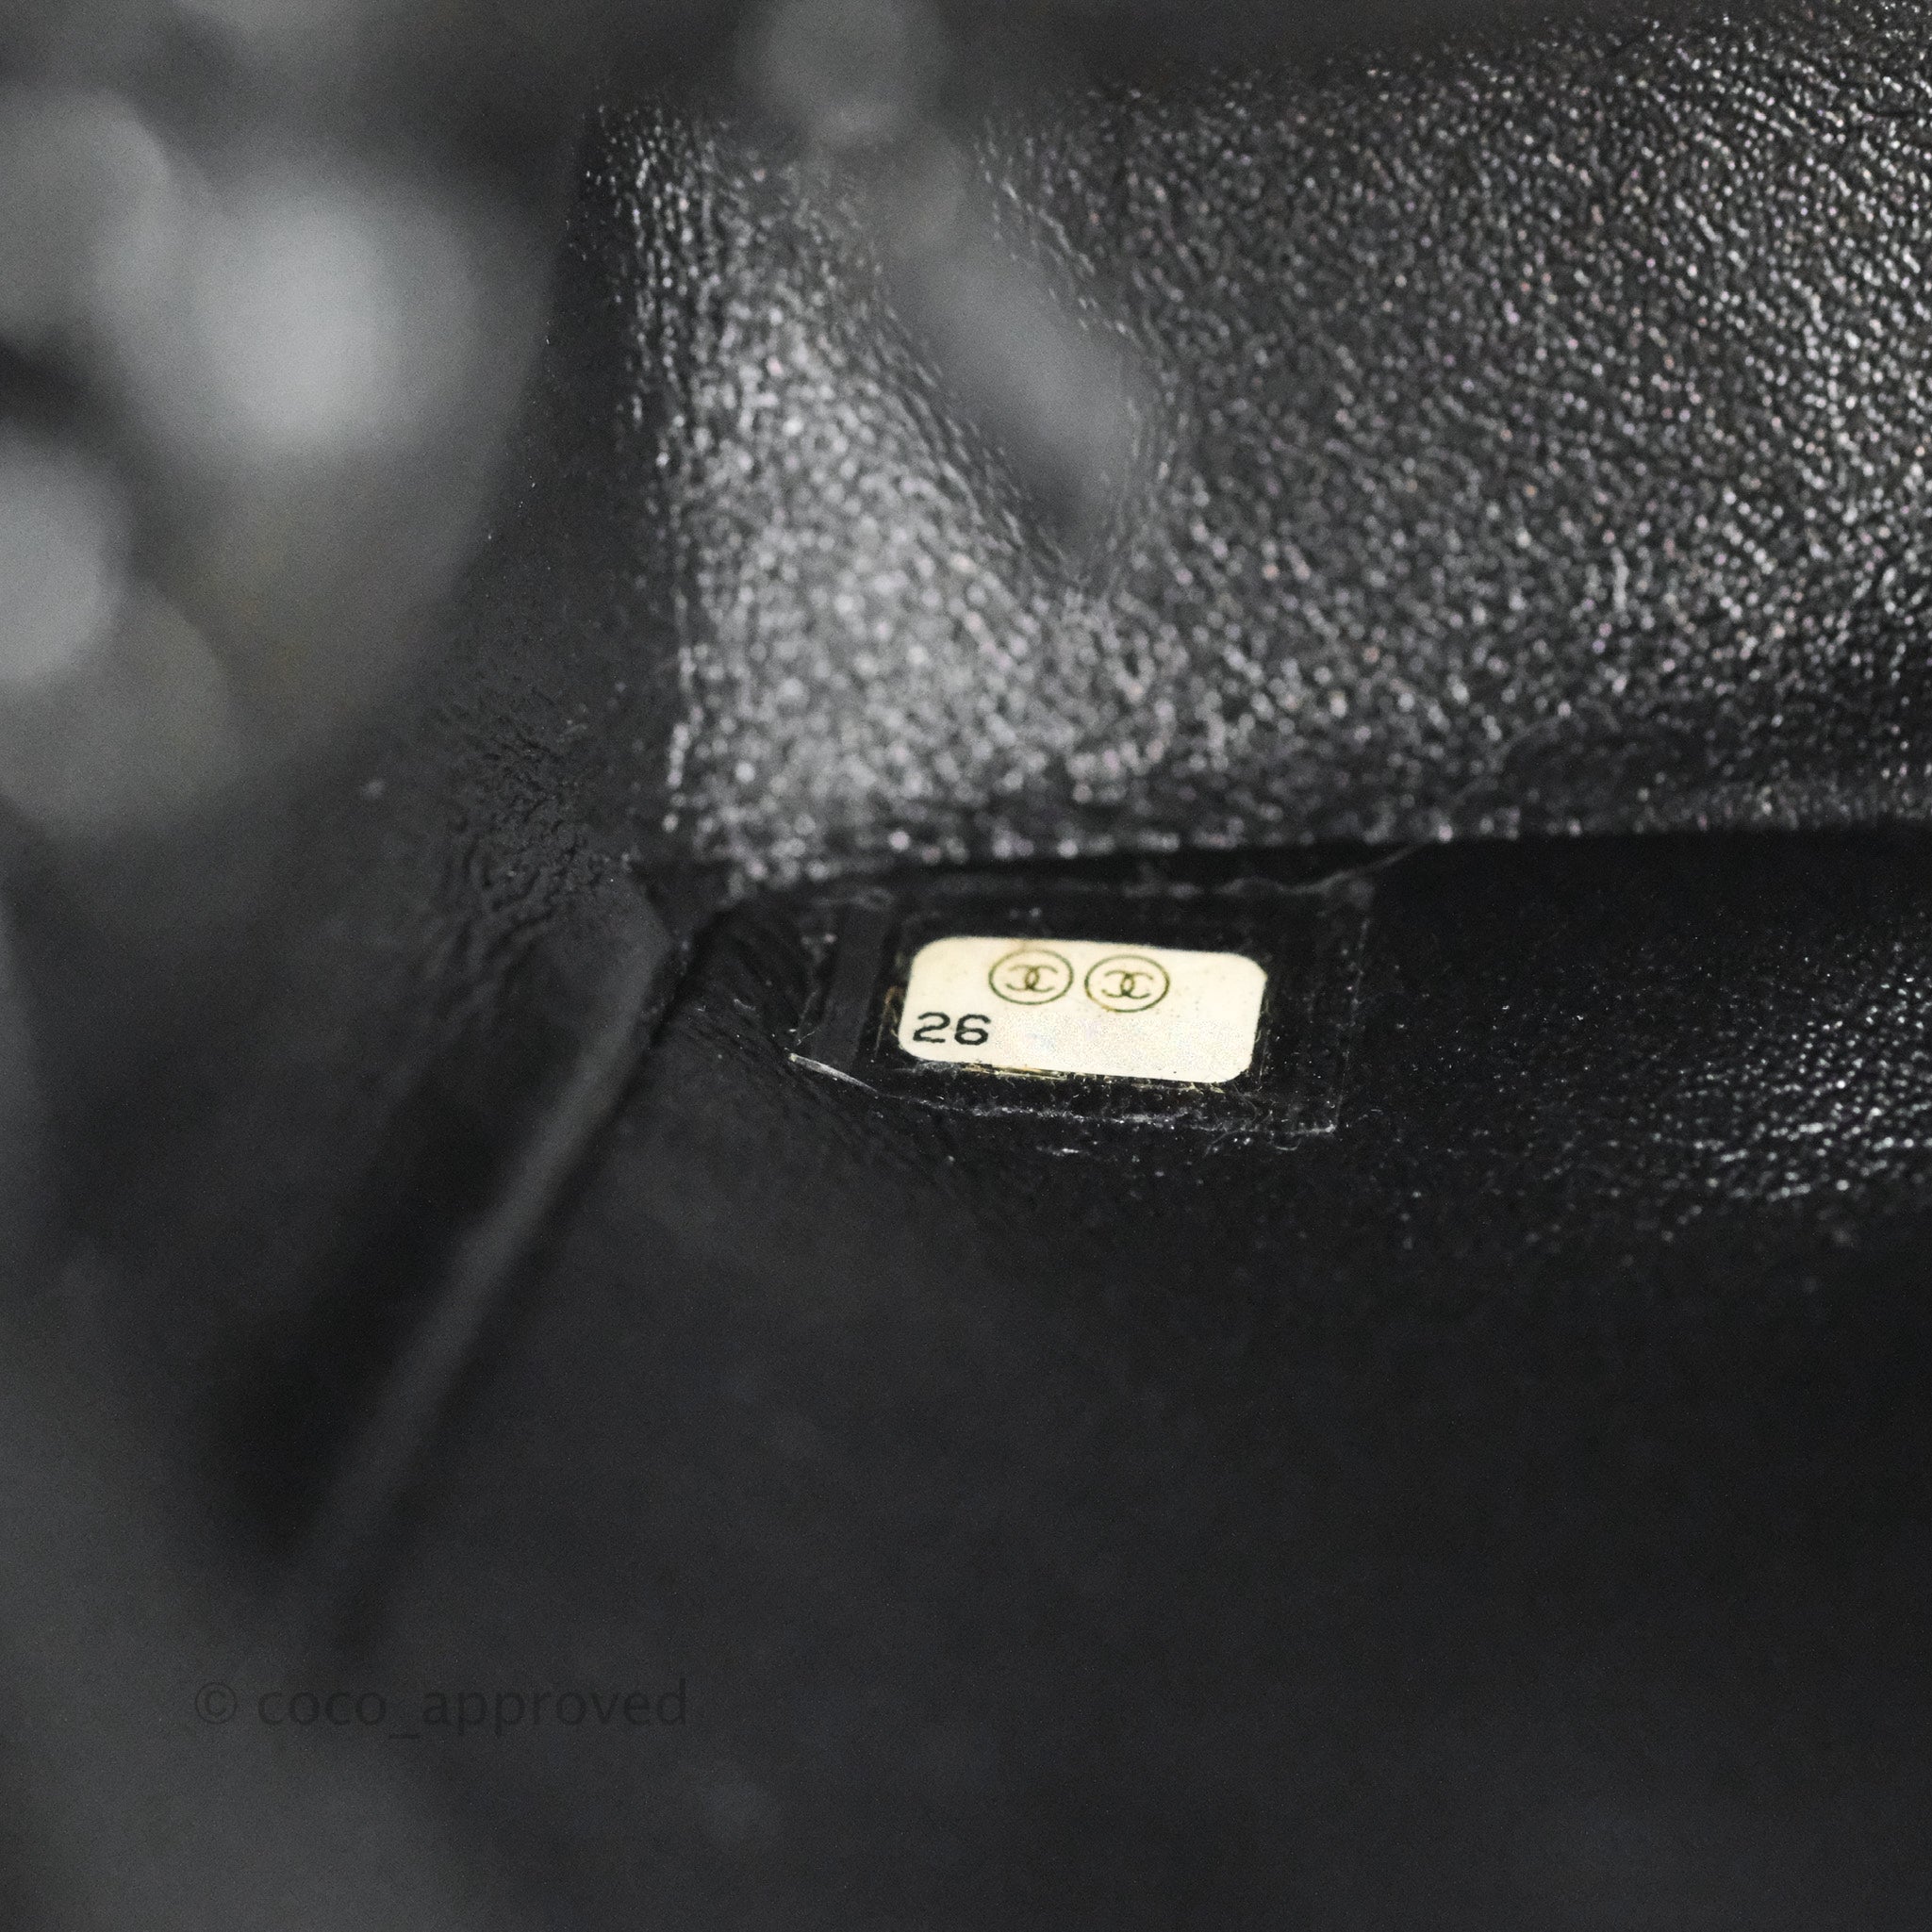 Chanel Mini Flap Bag Patent Calfskin Enamel and Gold Tone Metal Balck